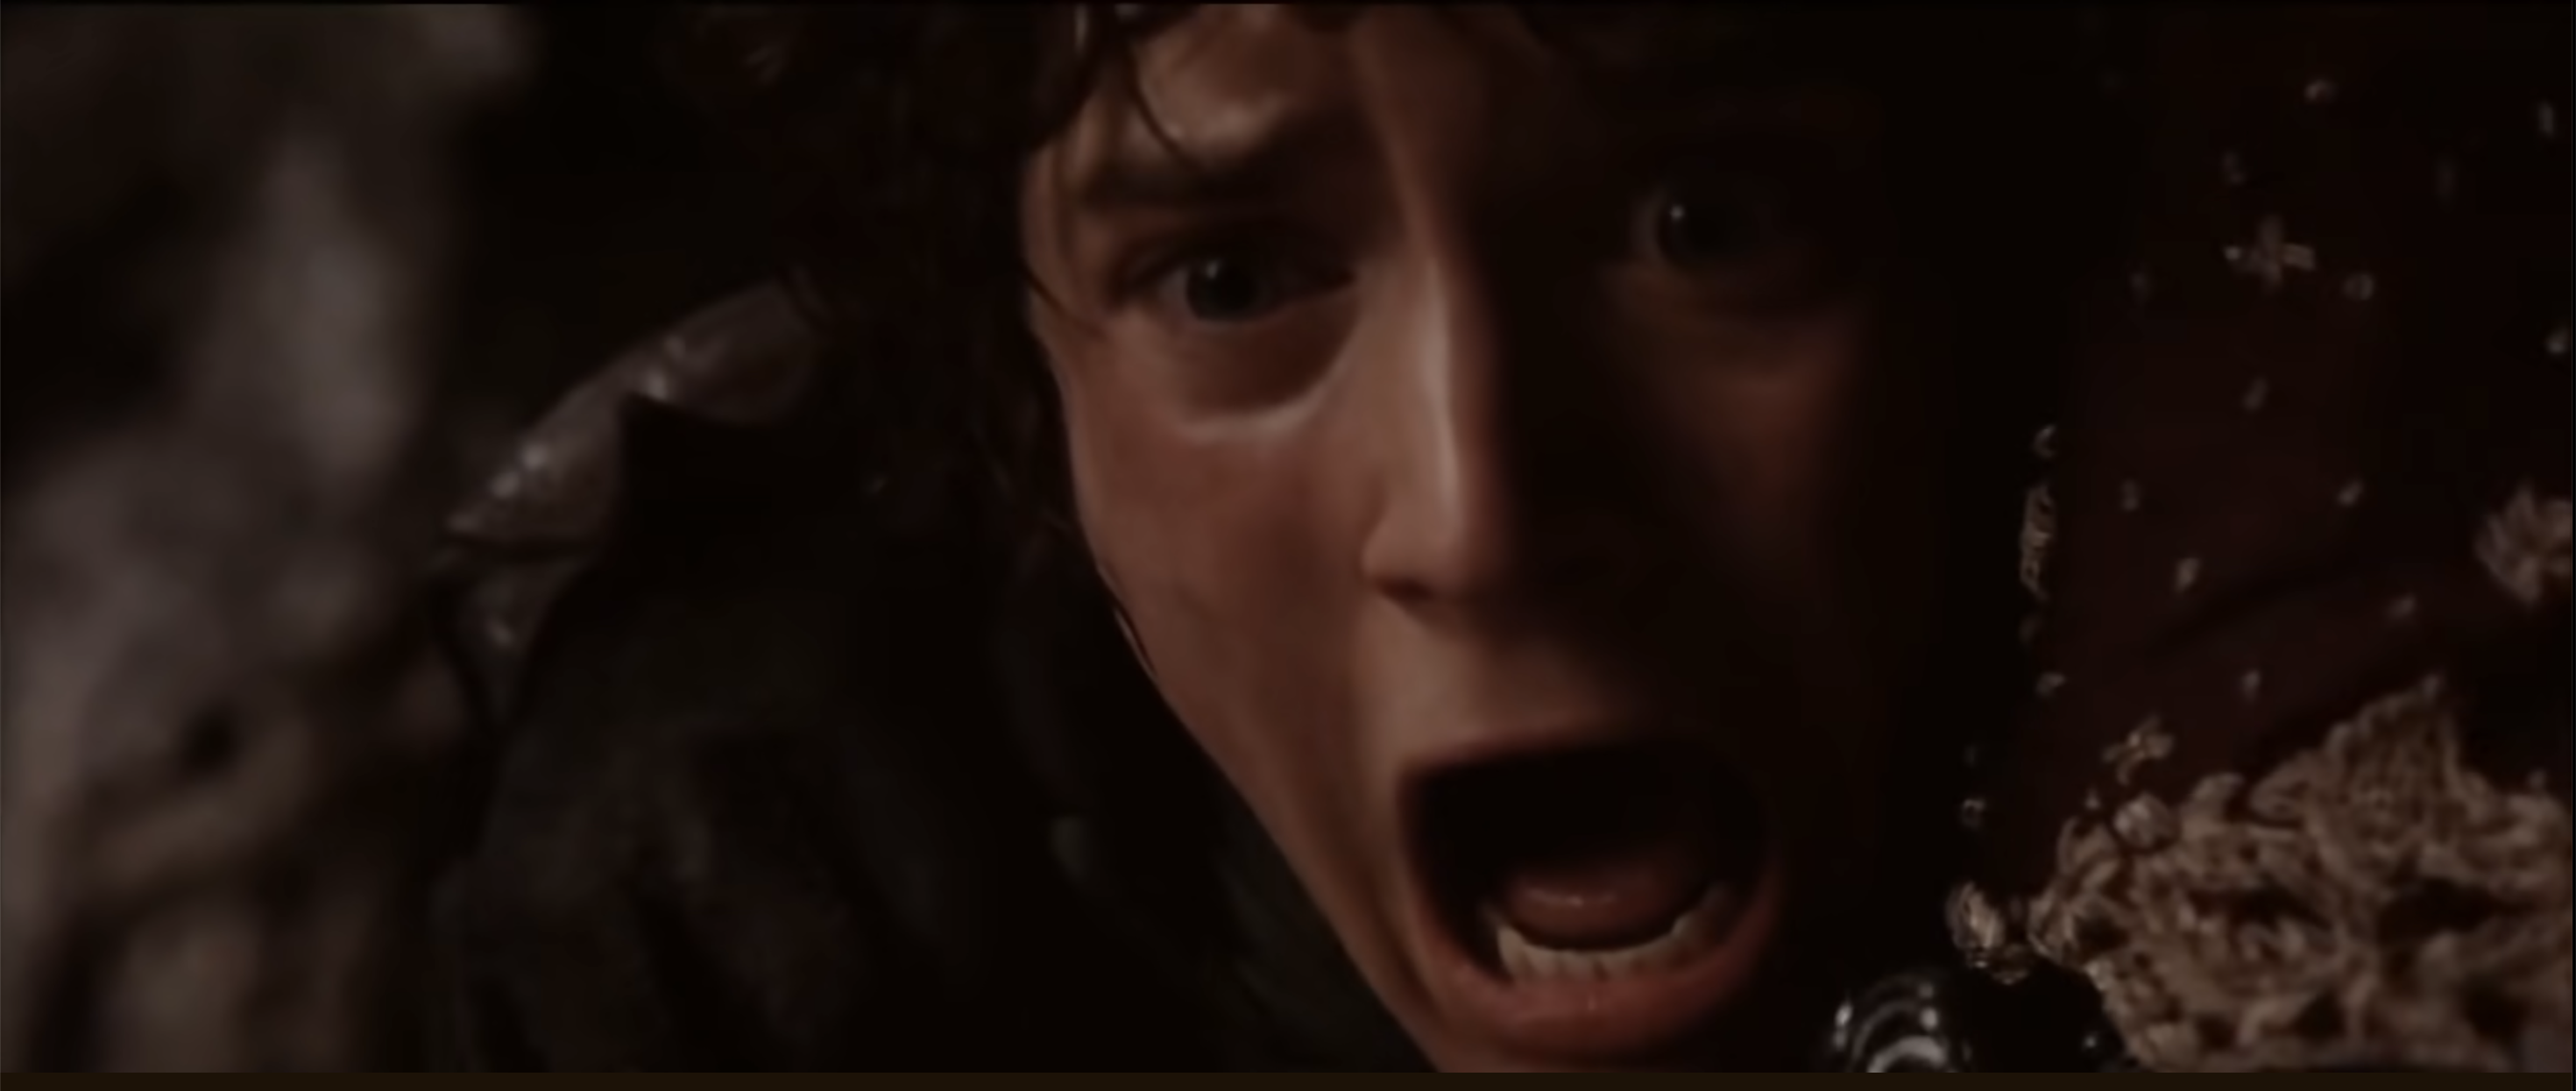 Frodo screams "Gandalf" Blank Meme Template